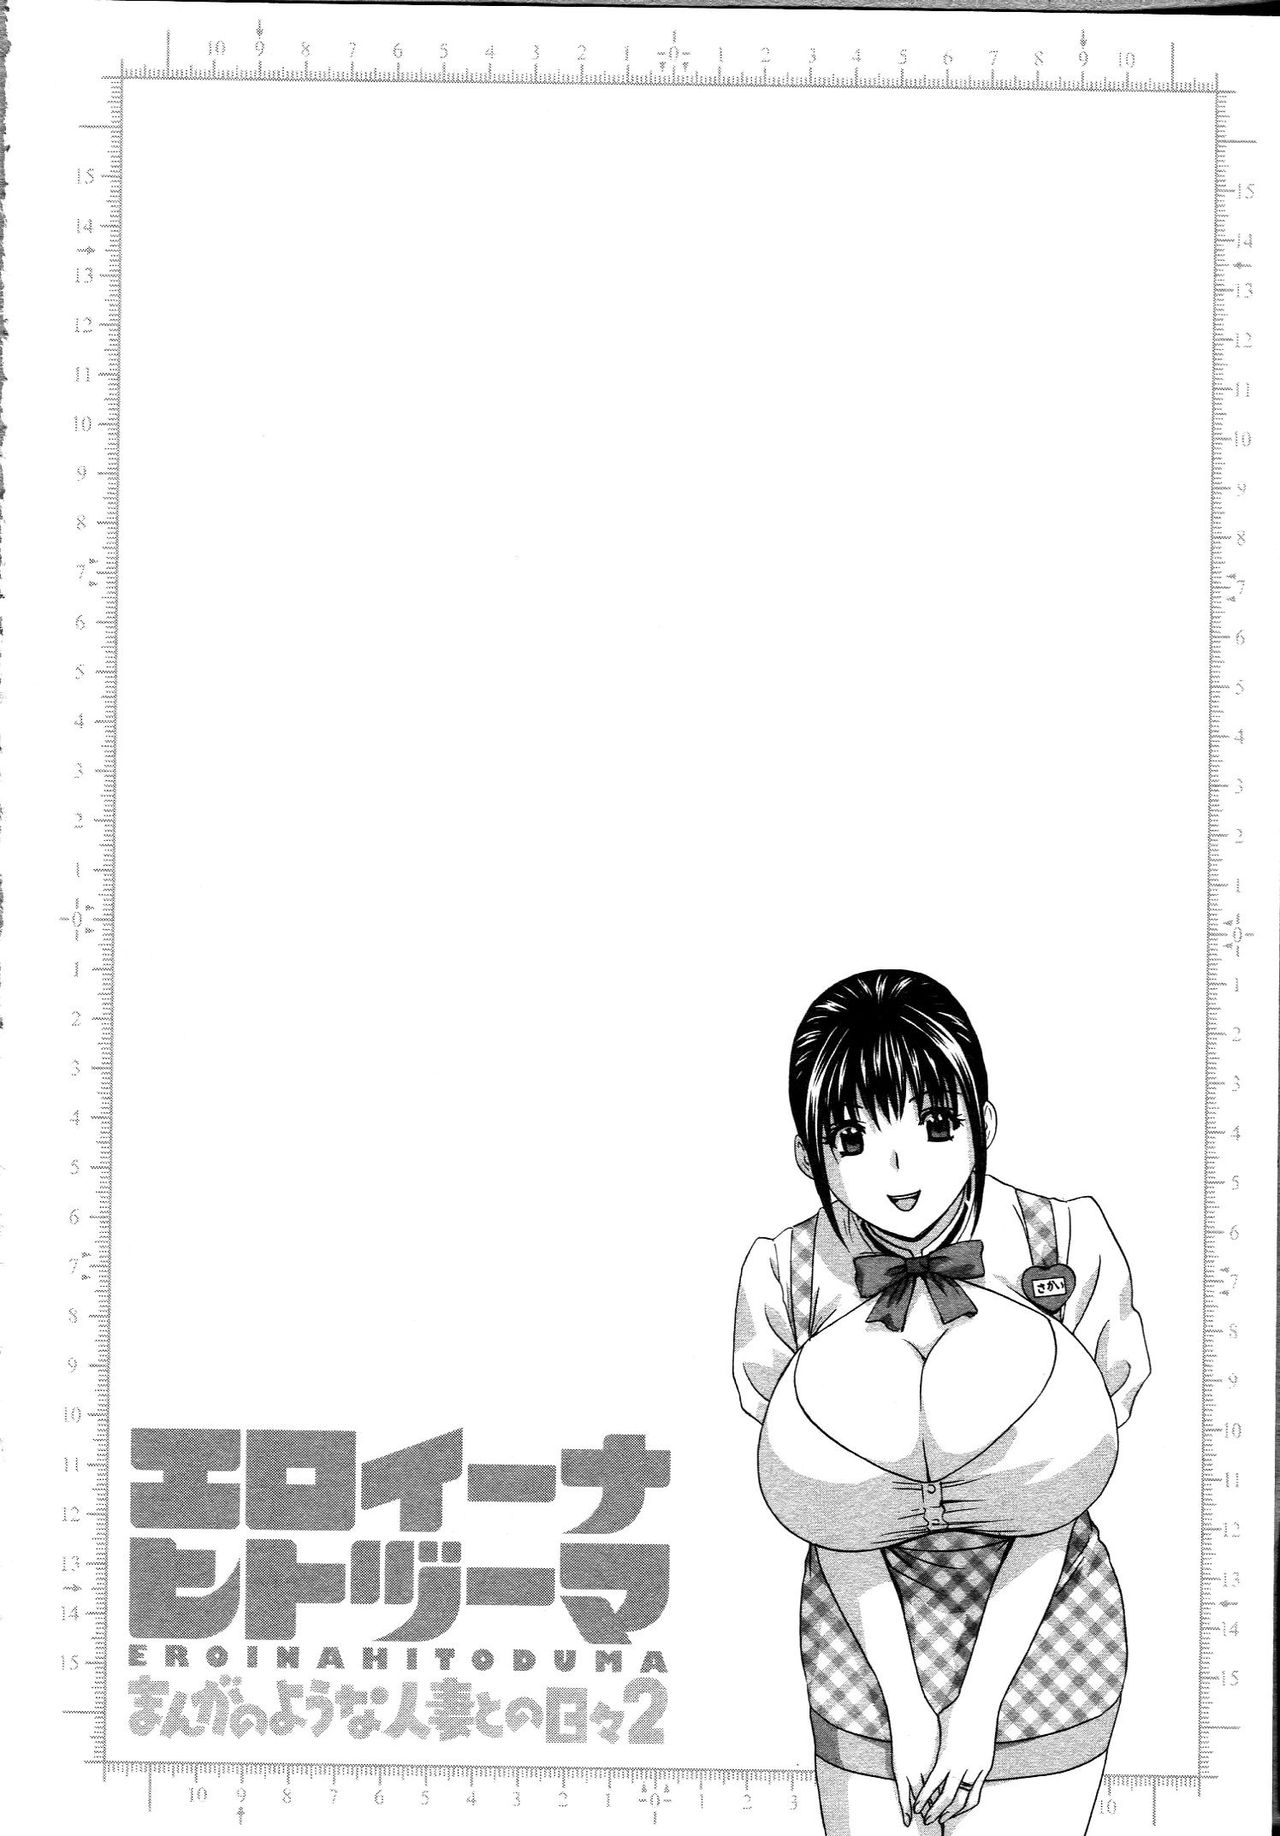 [Hidemaru] Eroina Hitoduma - Manga no youna Hitozuma to no Hibi 2 | Life with Married Women Just Like a Manga 2 [German] [SchmidtSST] 116